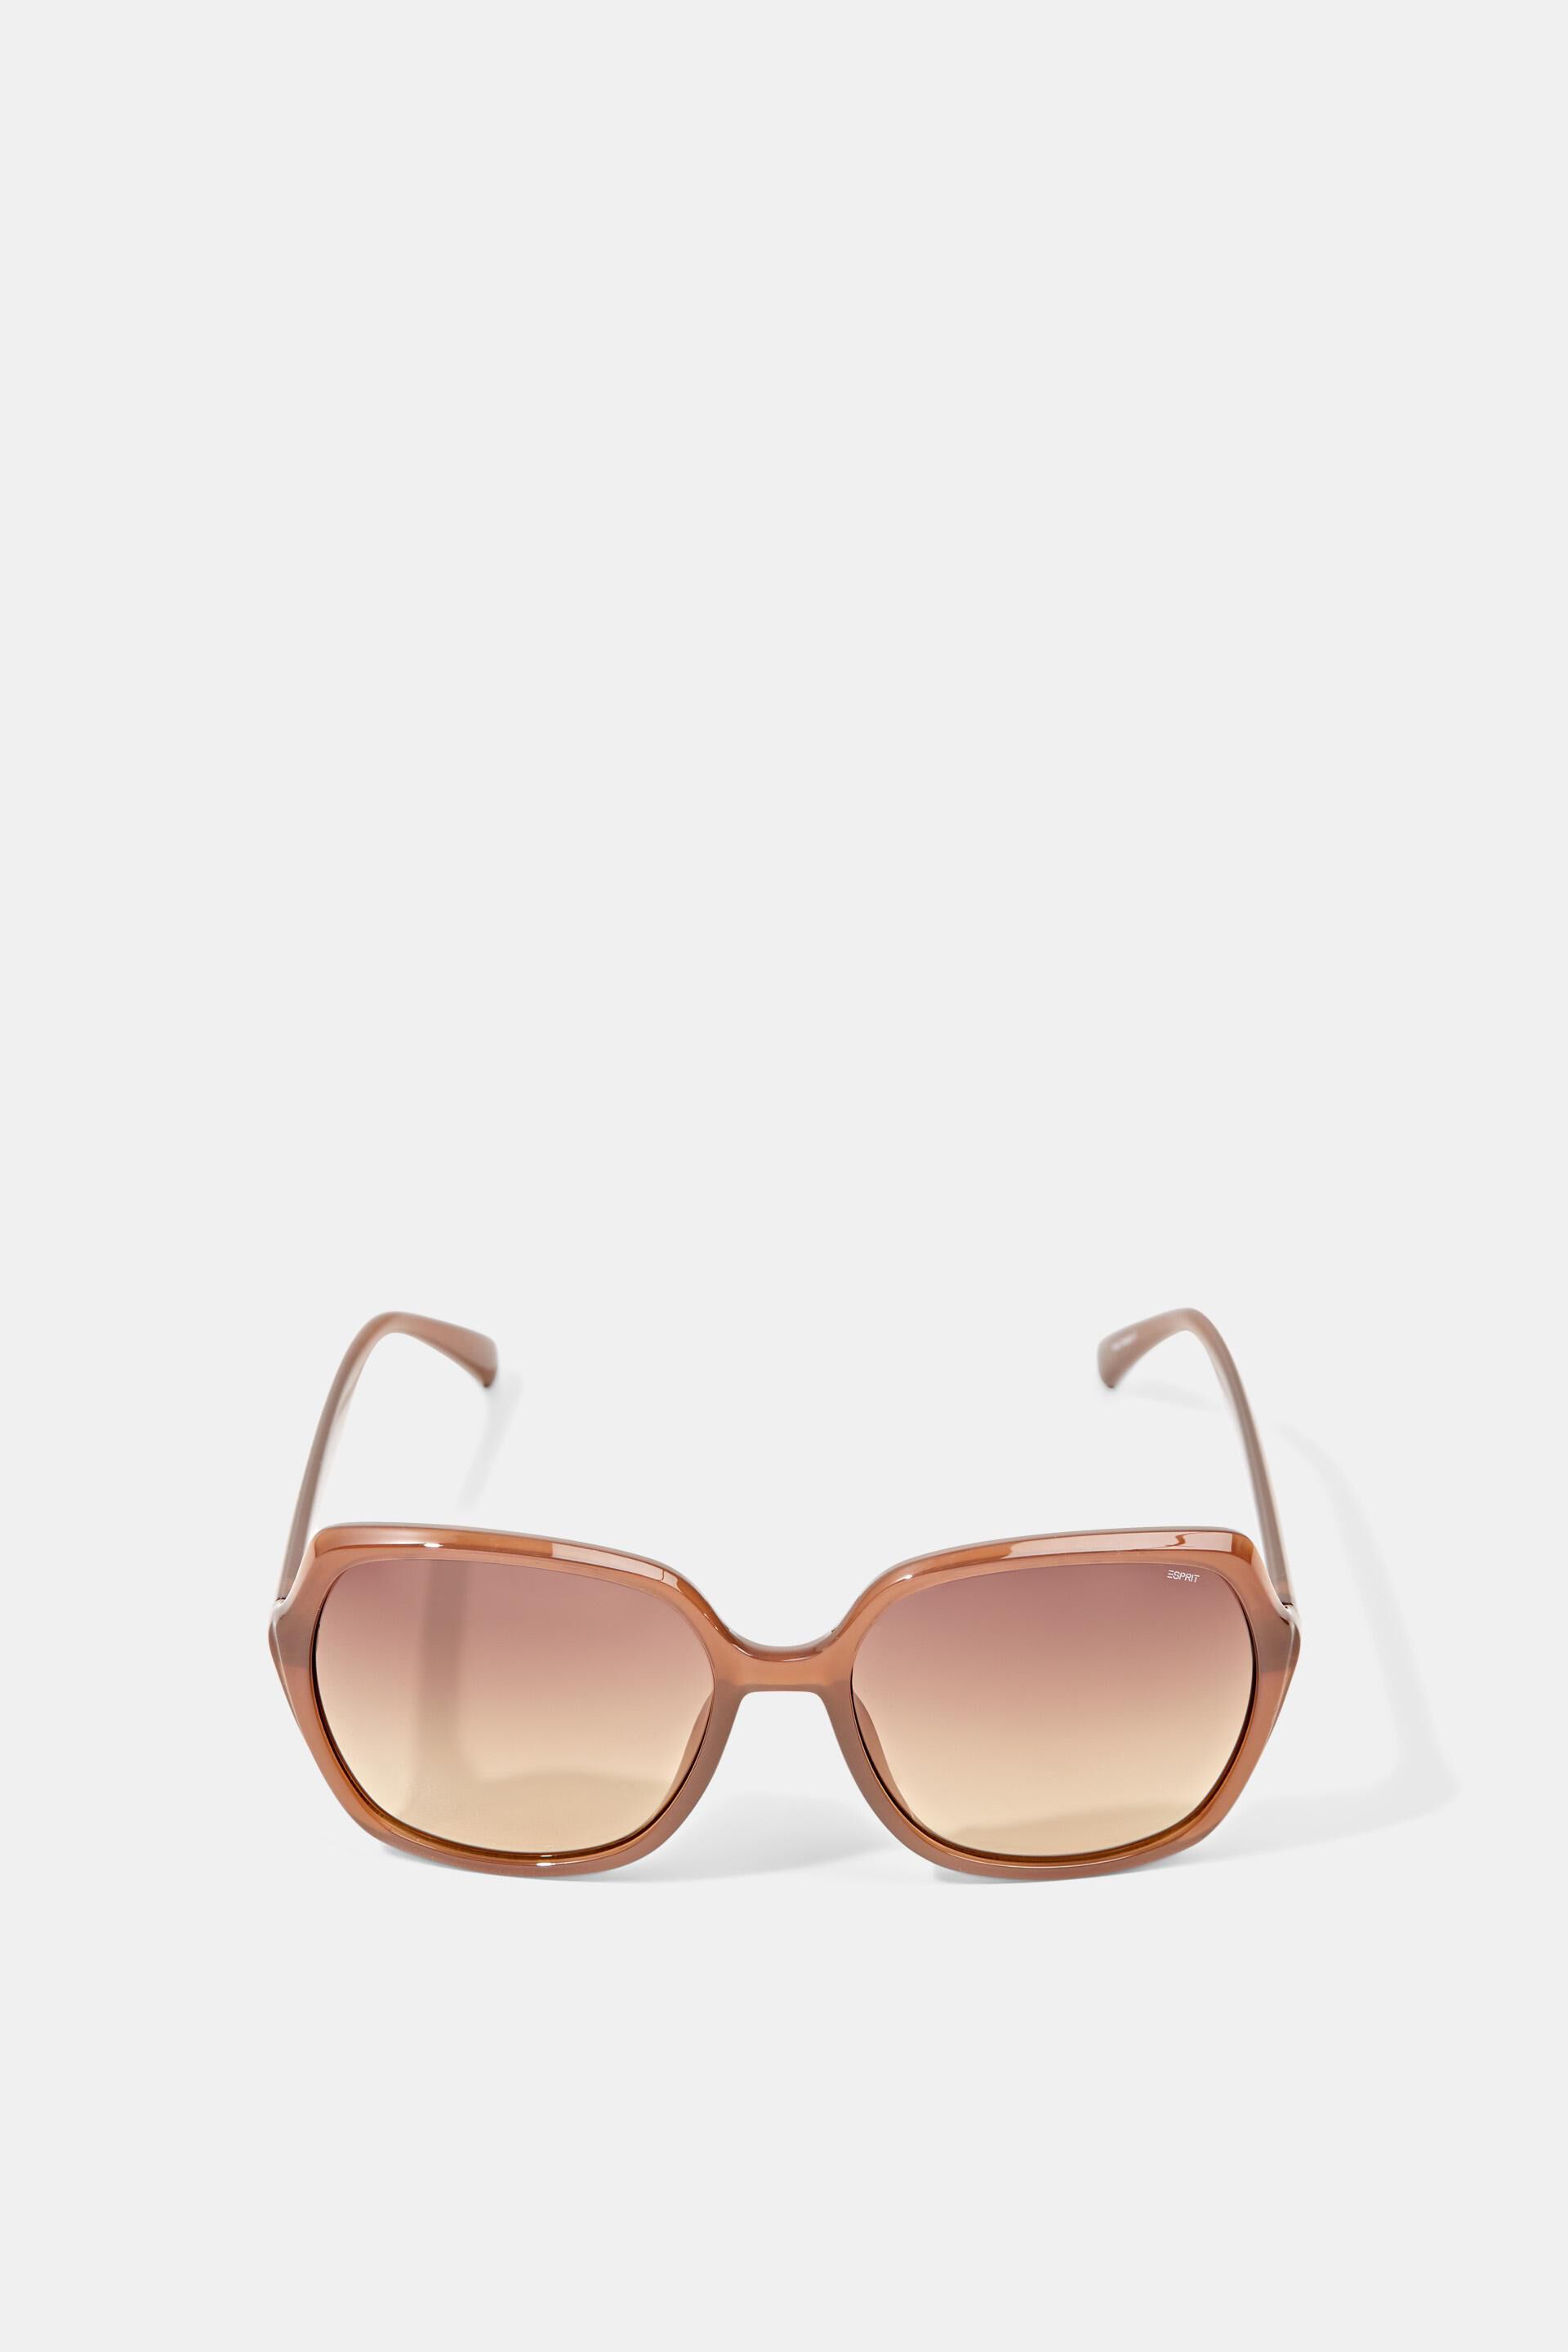 Esprit Online Store Statement sunglasses with lenses large